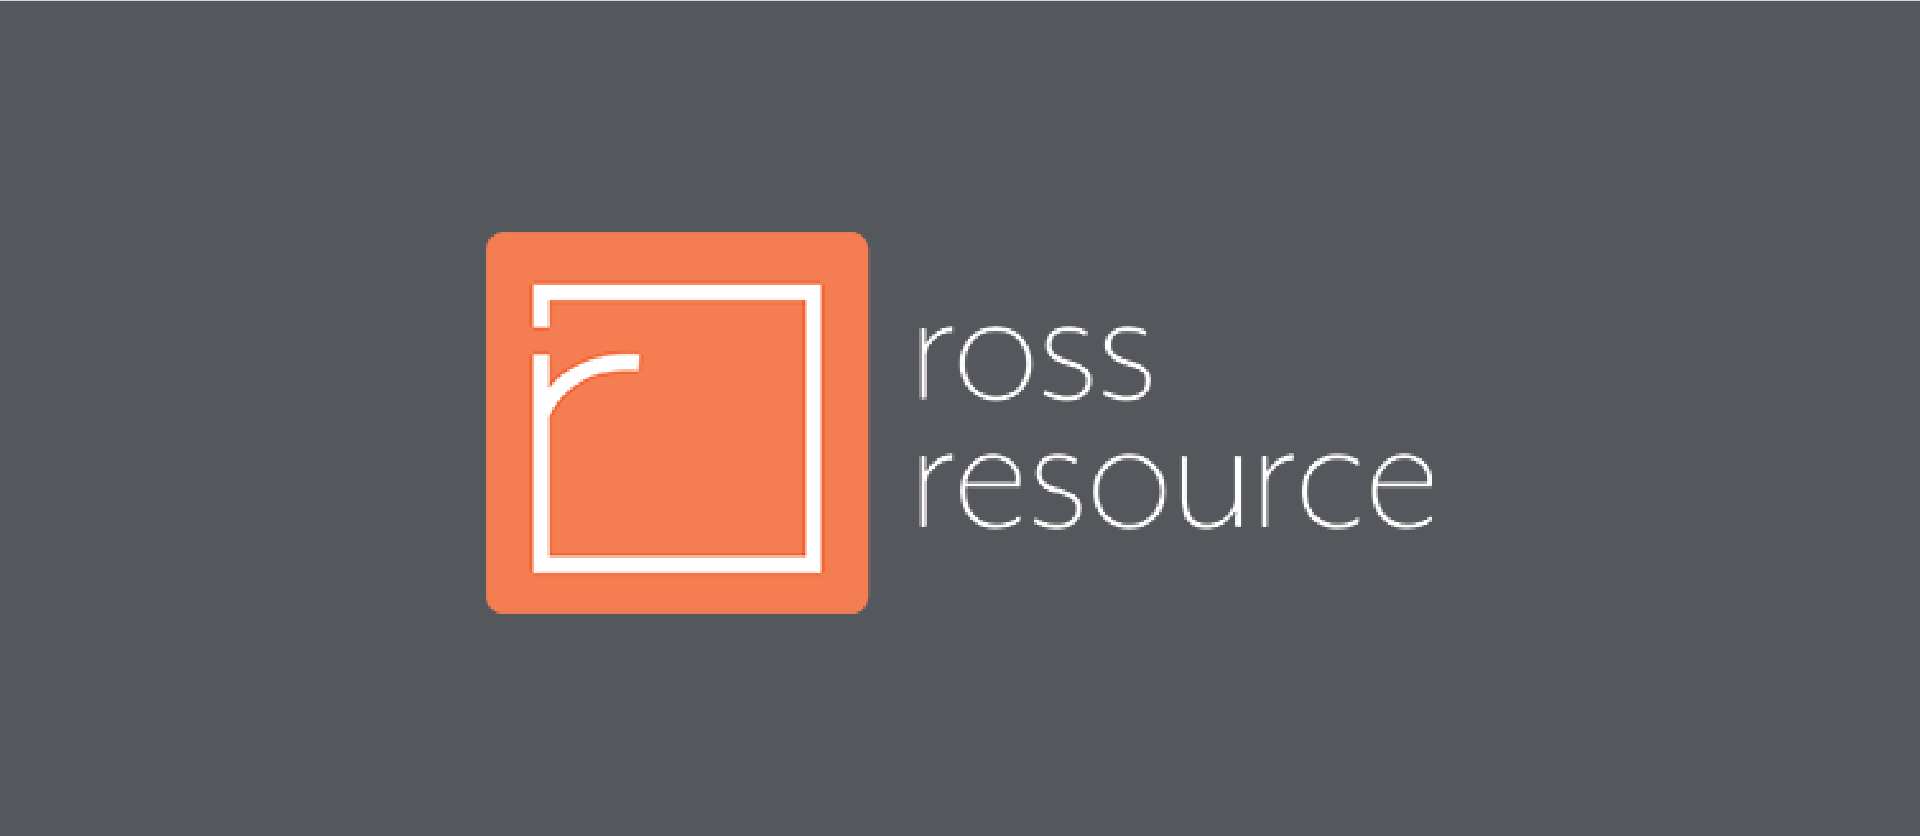 <h1>New Representative: Ross Resource</h1>